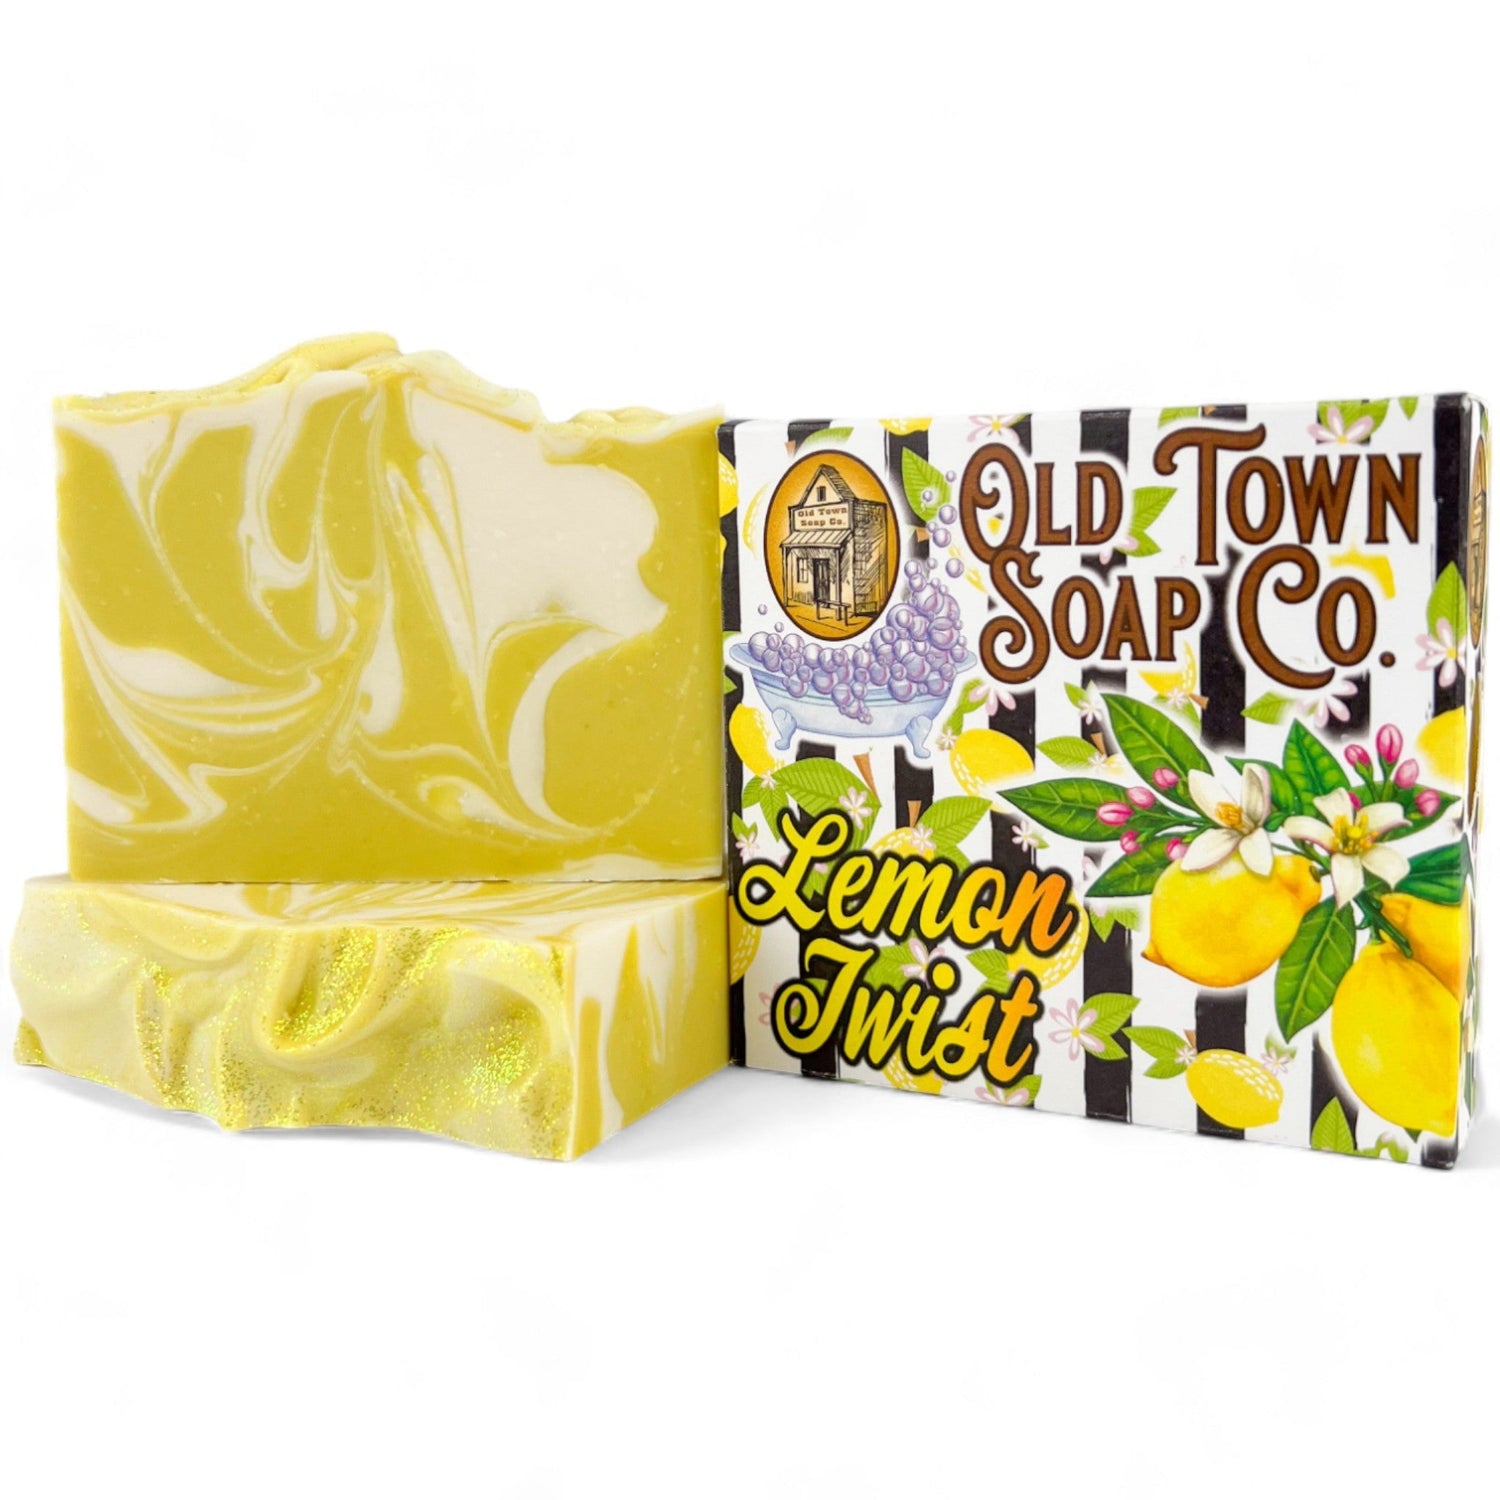 Lemon Twist -Bar Soap - Old Town Soap Co.